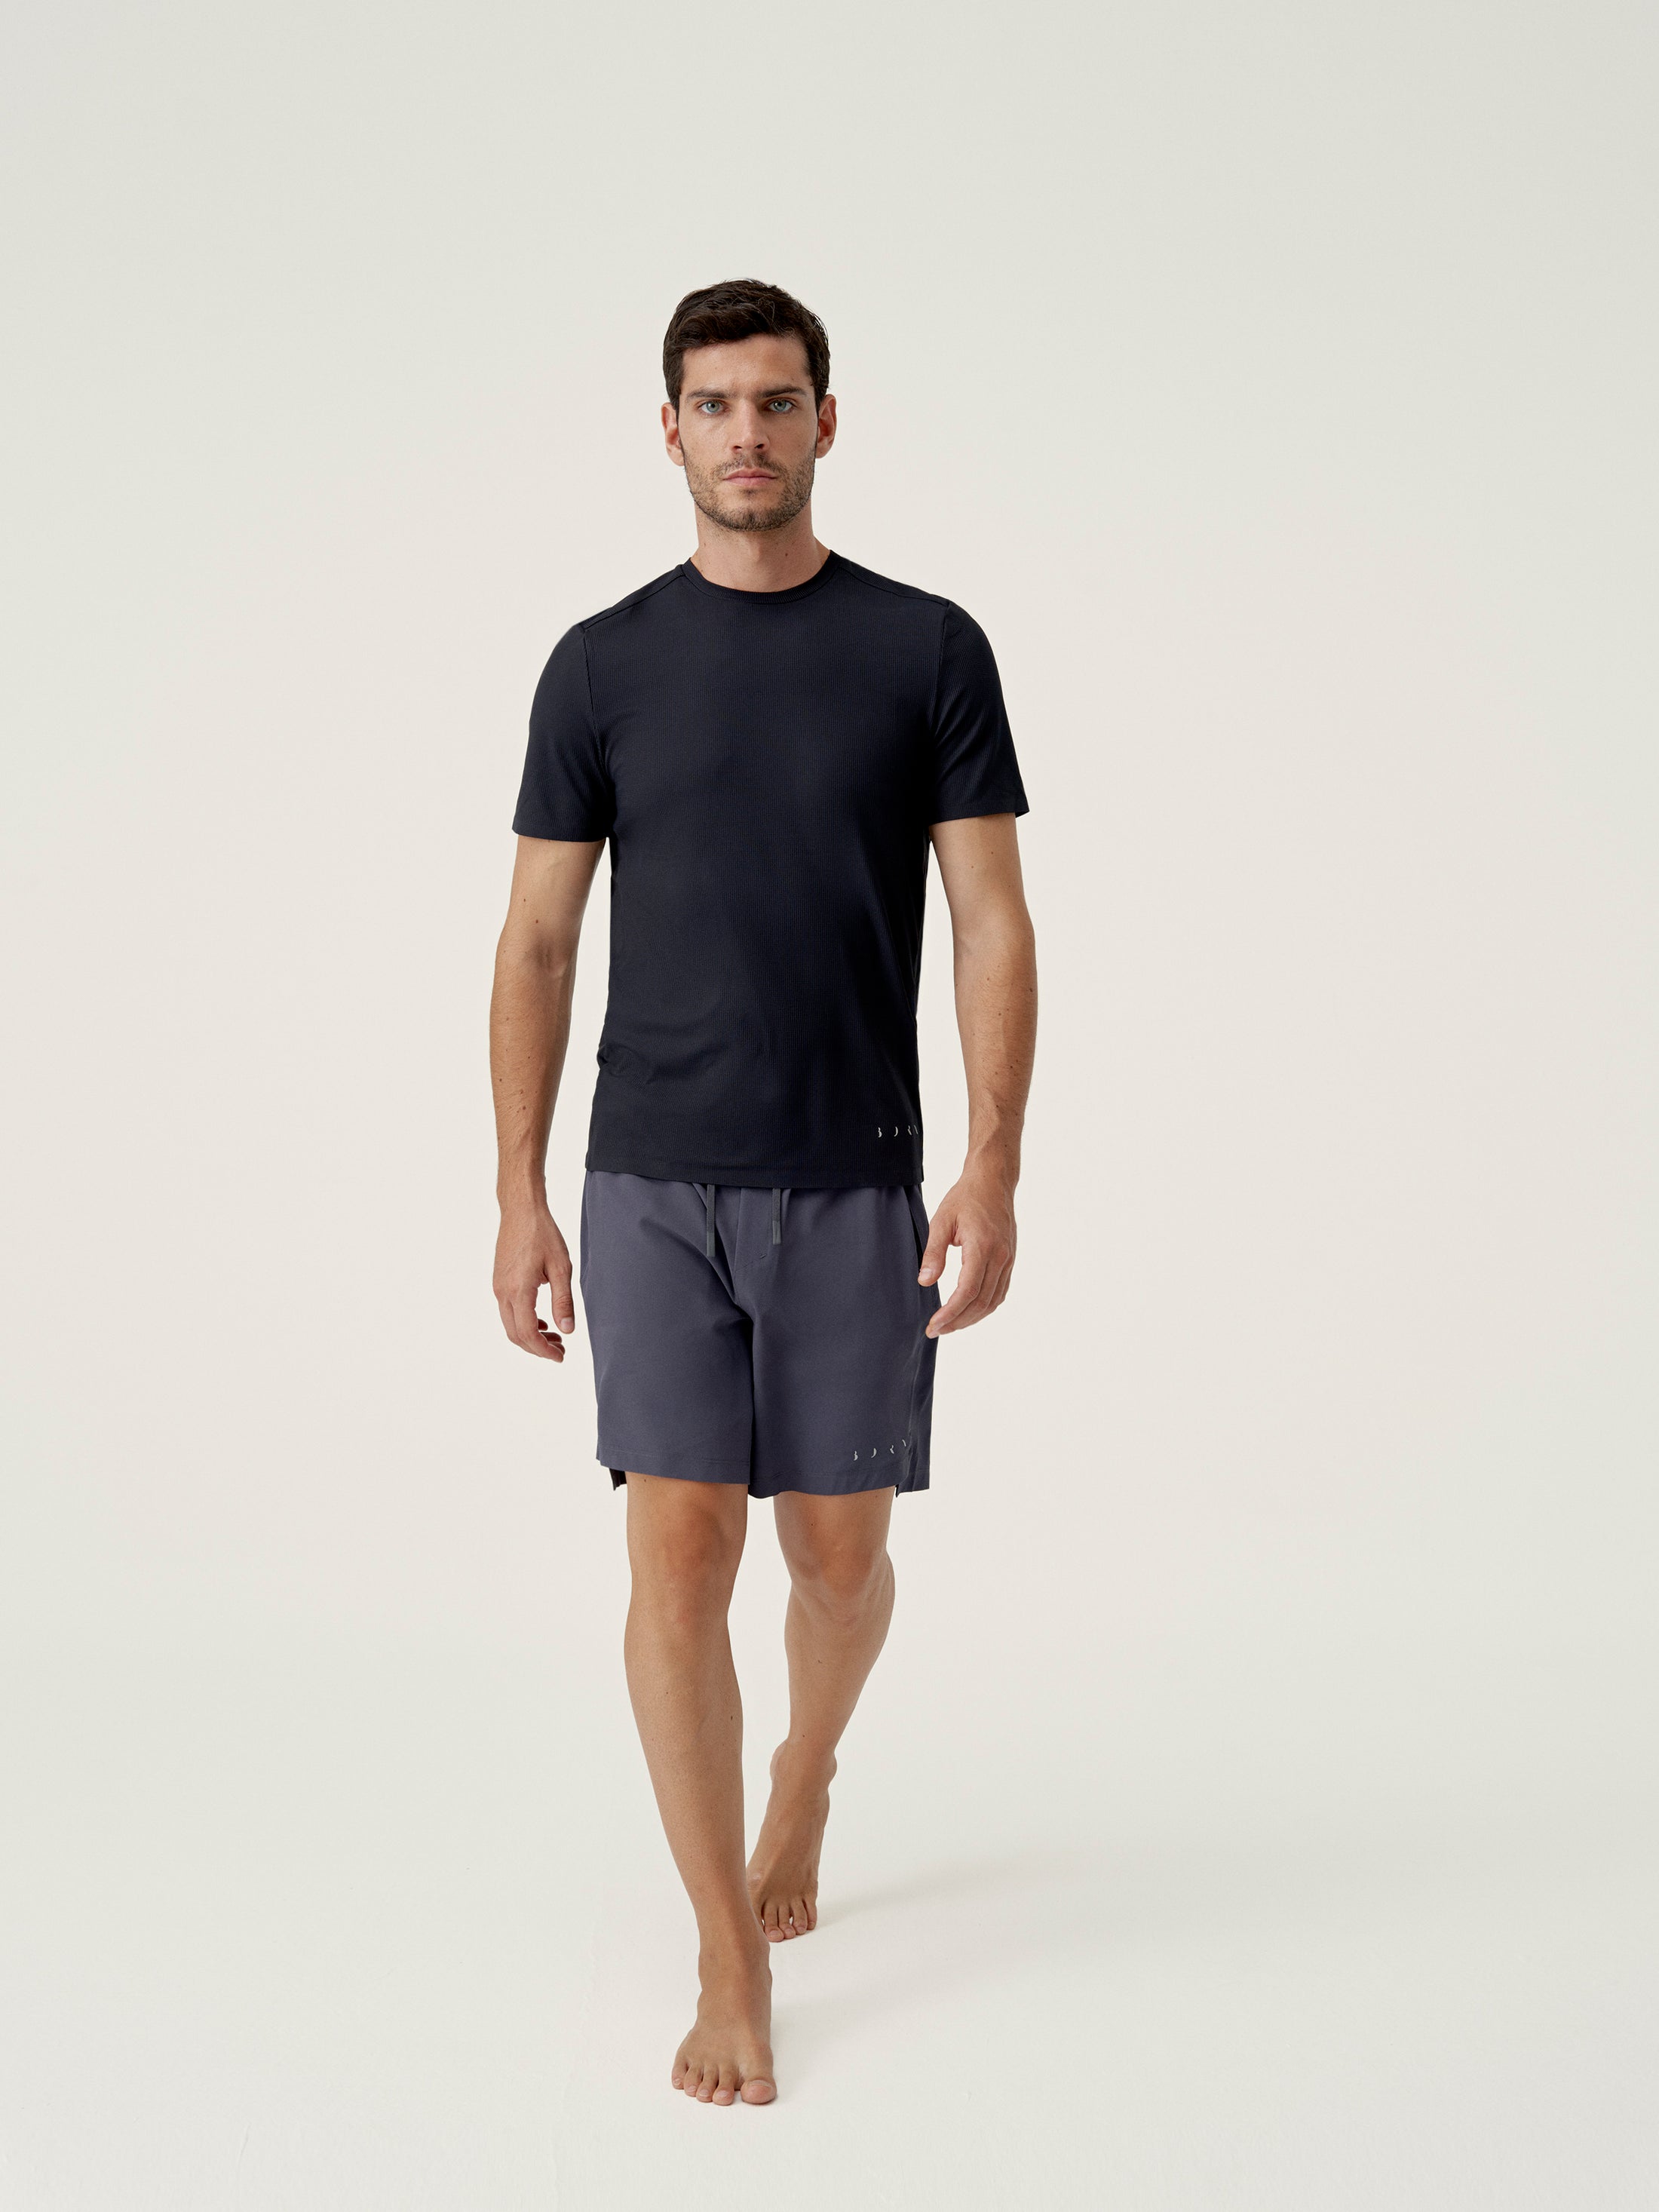 Natron Shorts in Road Grey